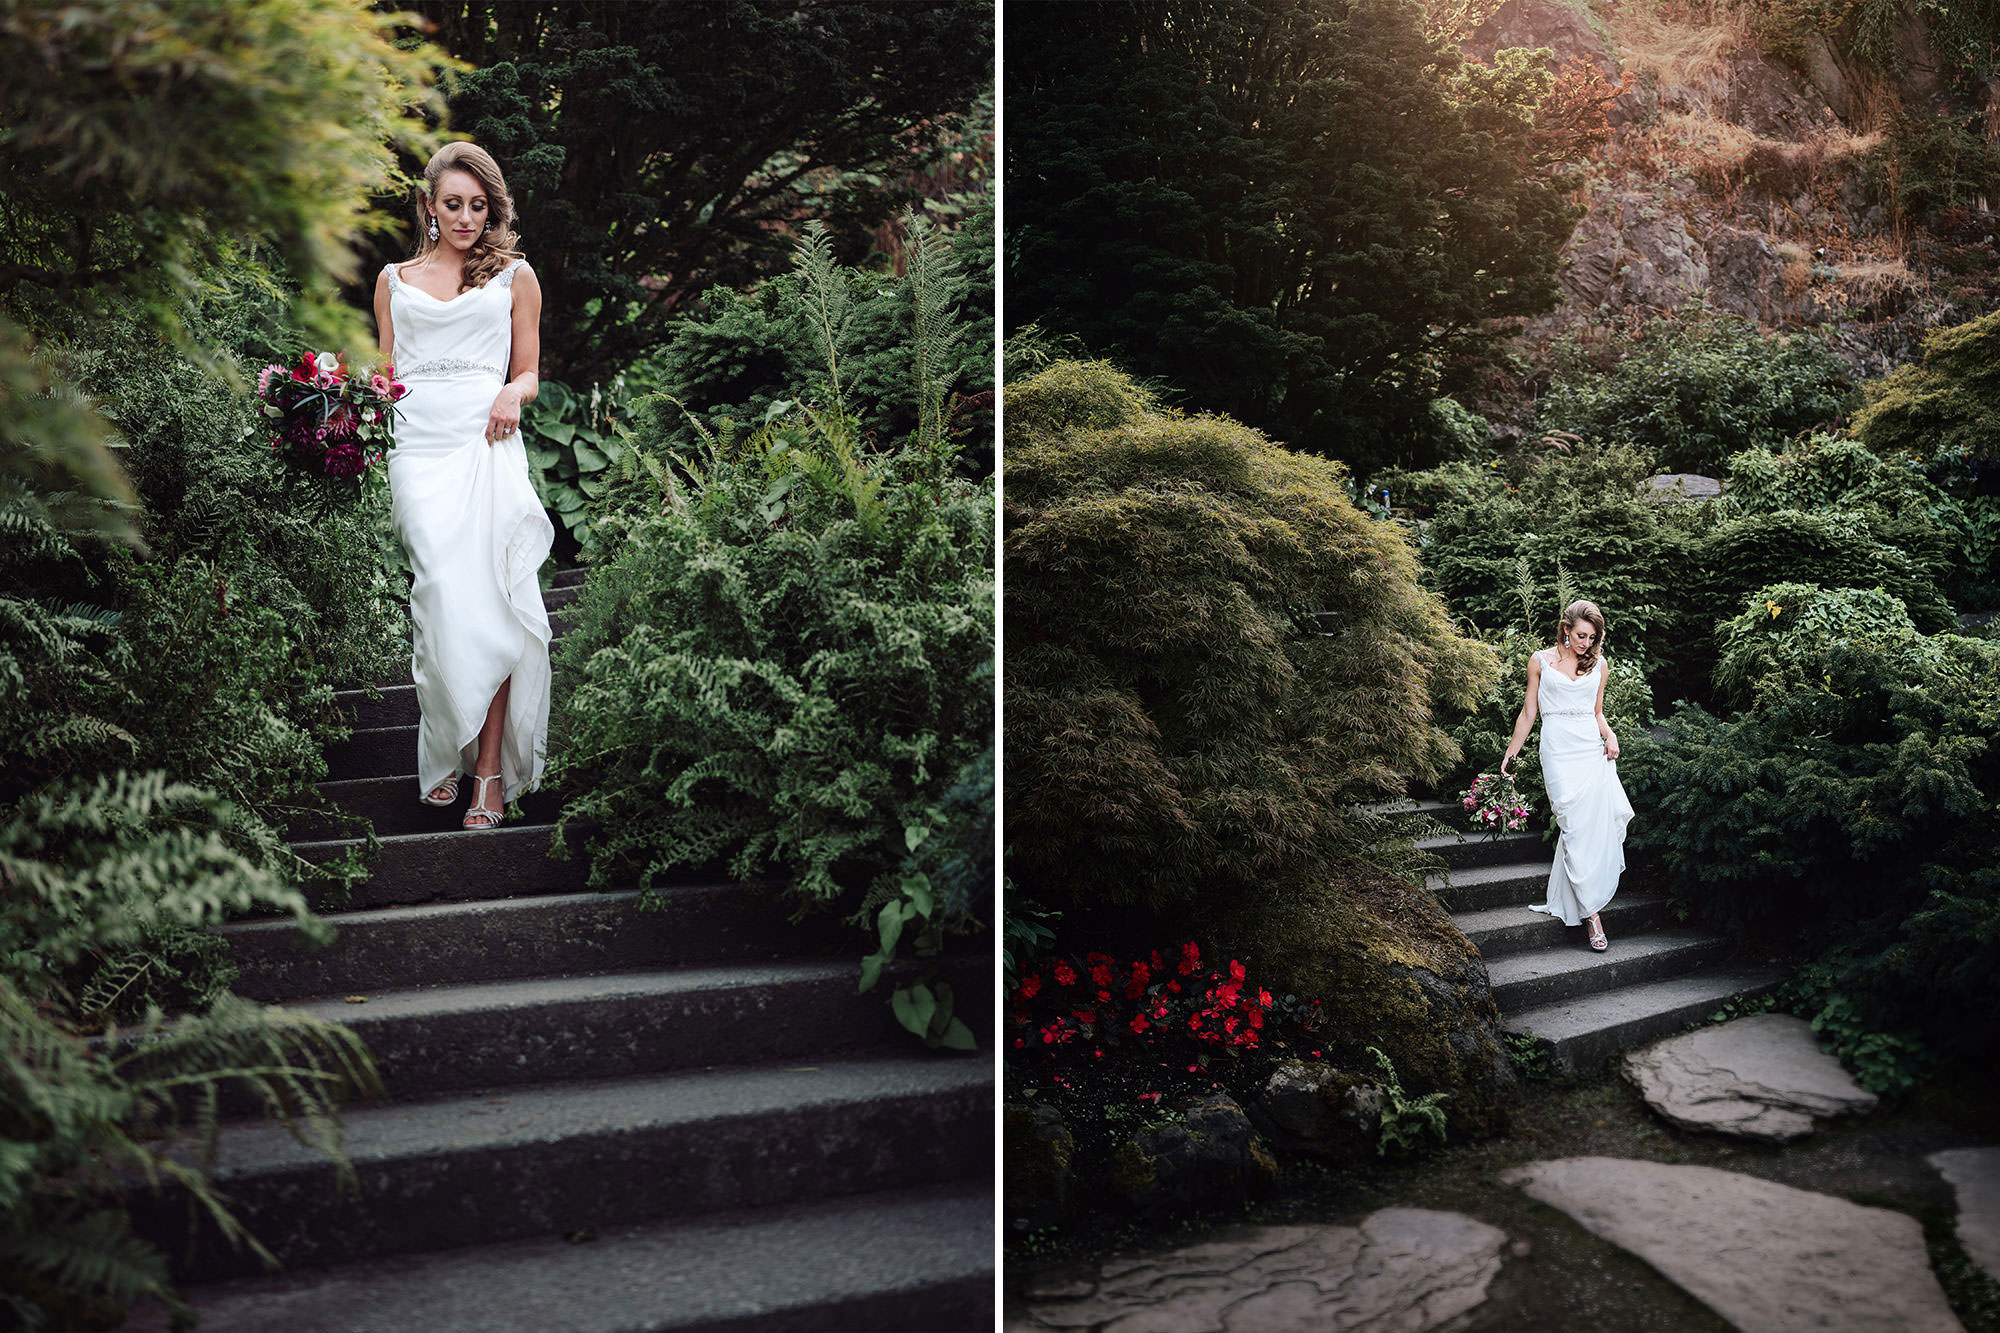 bride descending a stone stairway in a garden